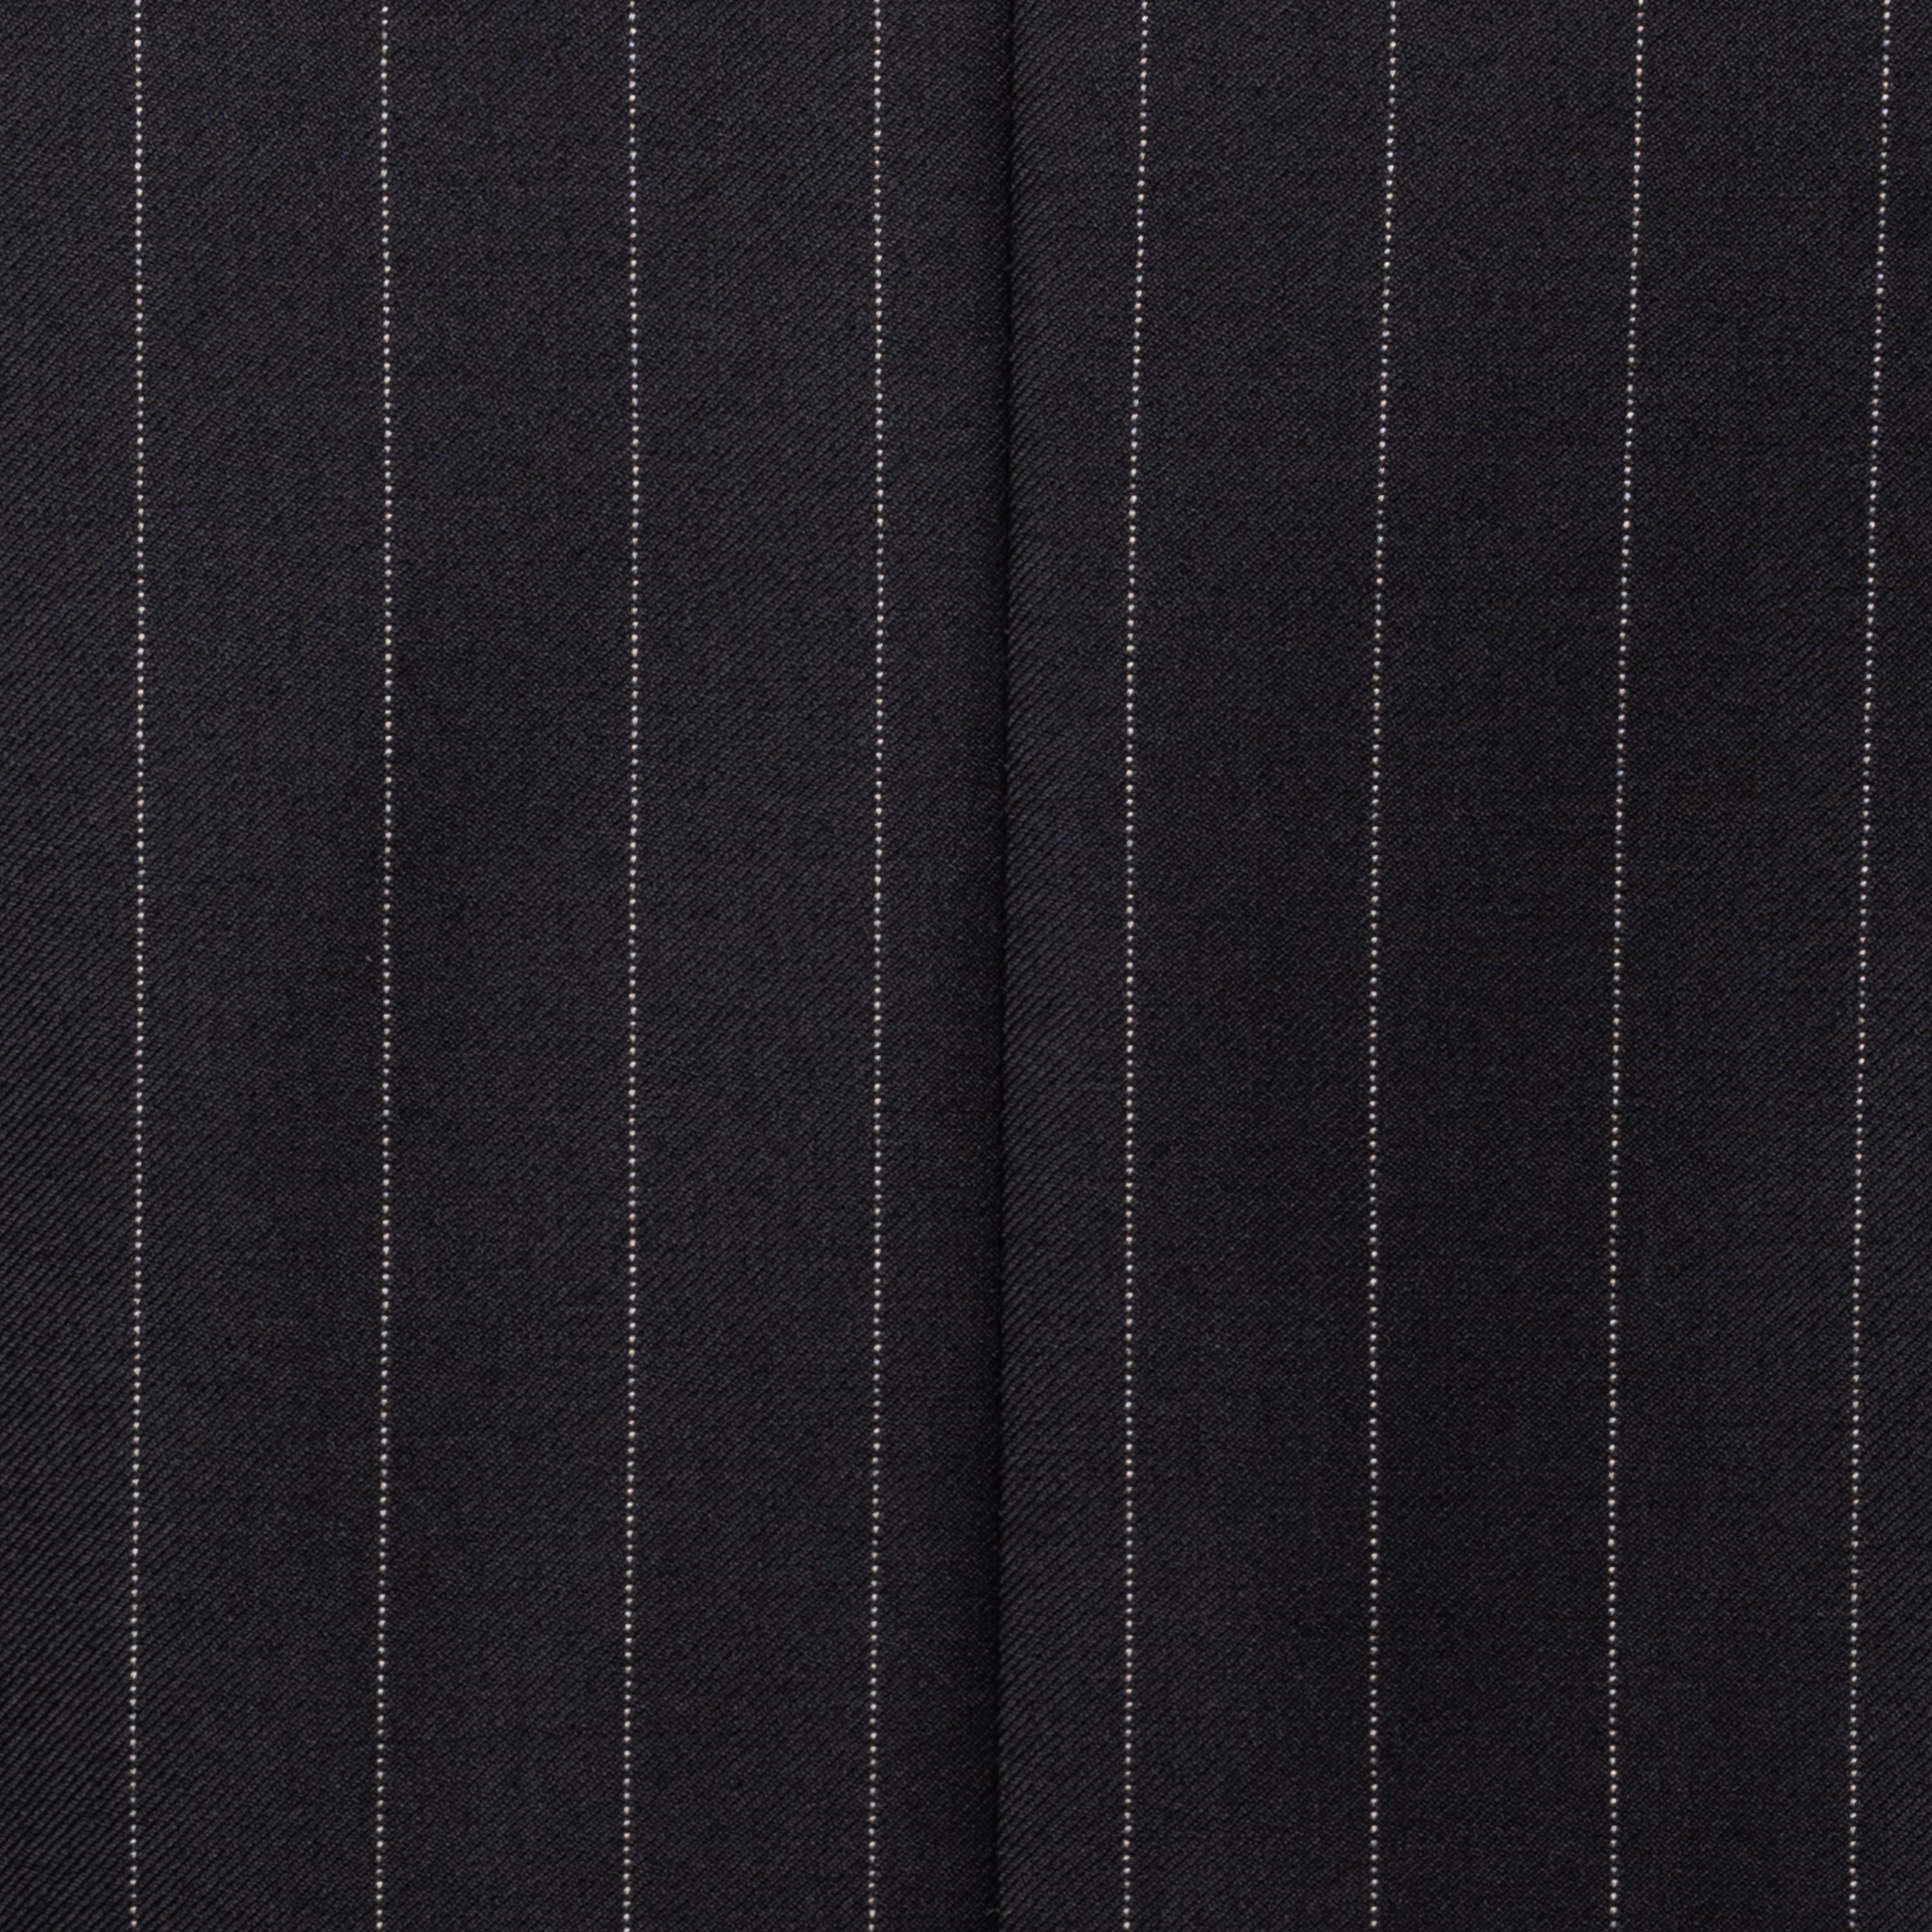 SARTORIA CASTANGIA Black Striped Wool Super 110's Suit EU 48 NEW US 38 CASTANGIA